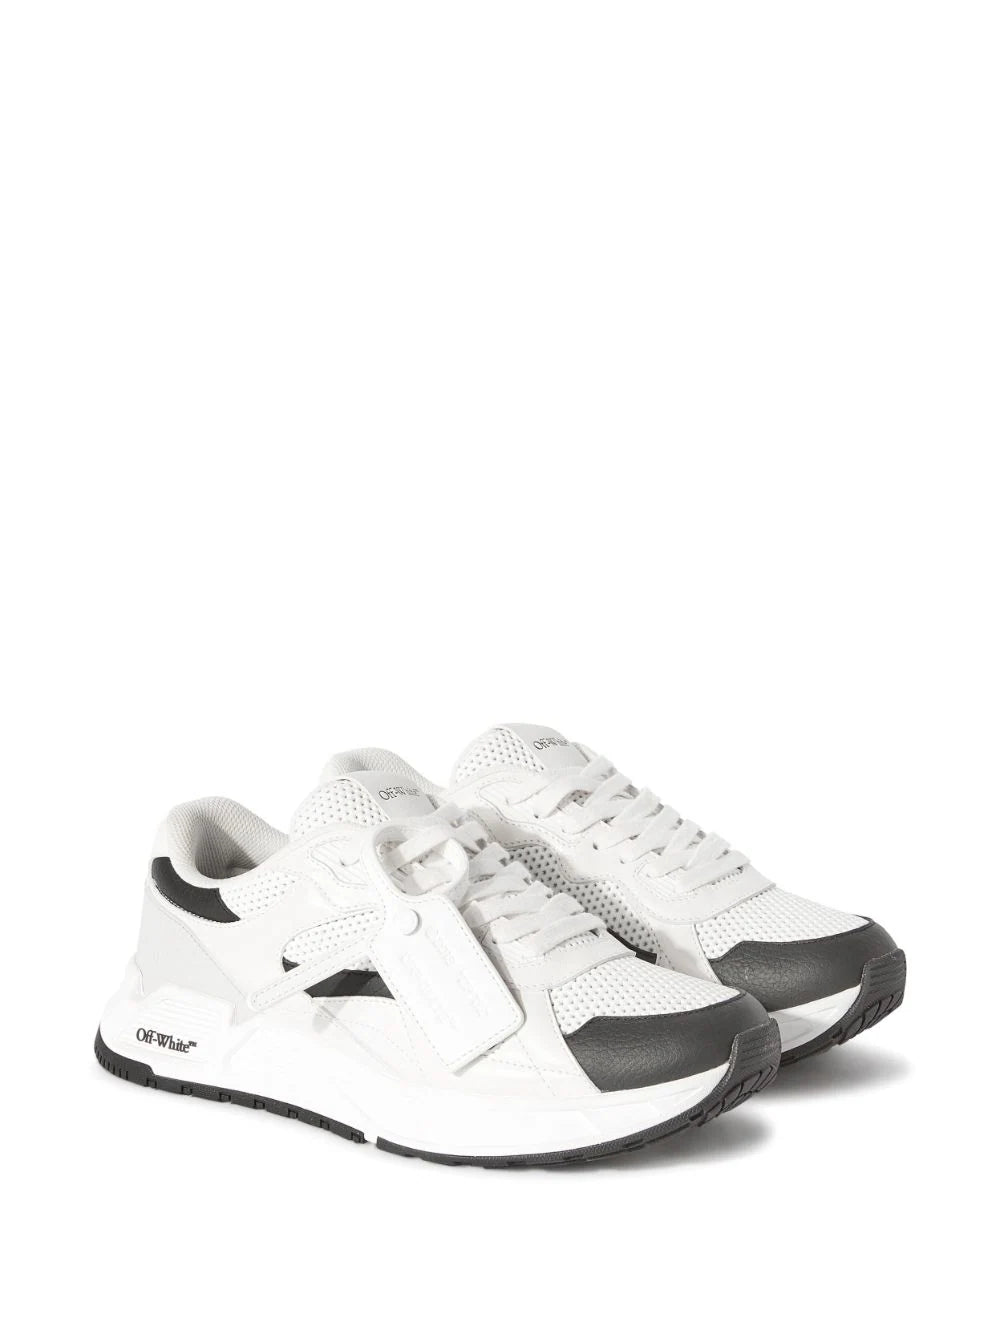 OFF-WHITE WOMEN Kick OFF Sneakers White/Black - MAISONDEFASHION.COM